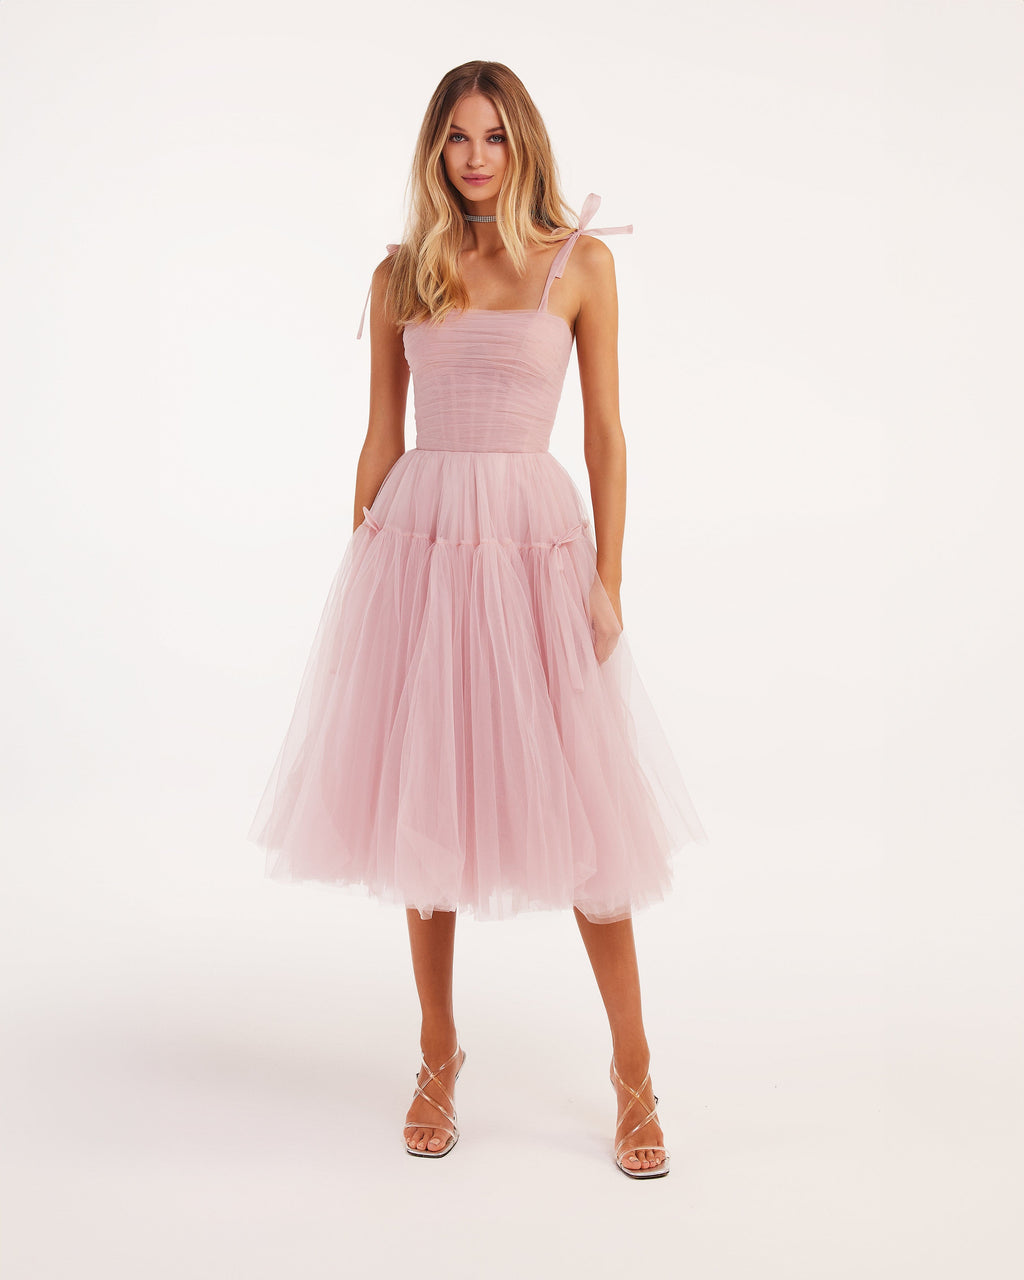 Gorgeous Dresses for the Millennial Pink Lover - FabFitFun